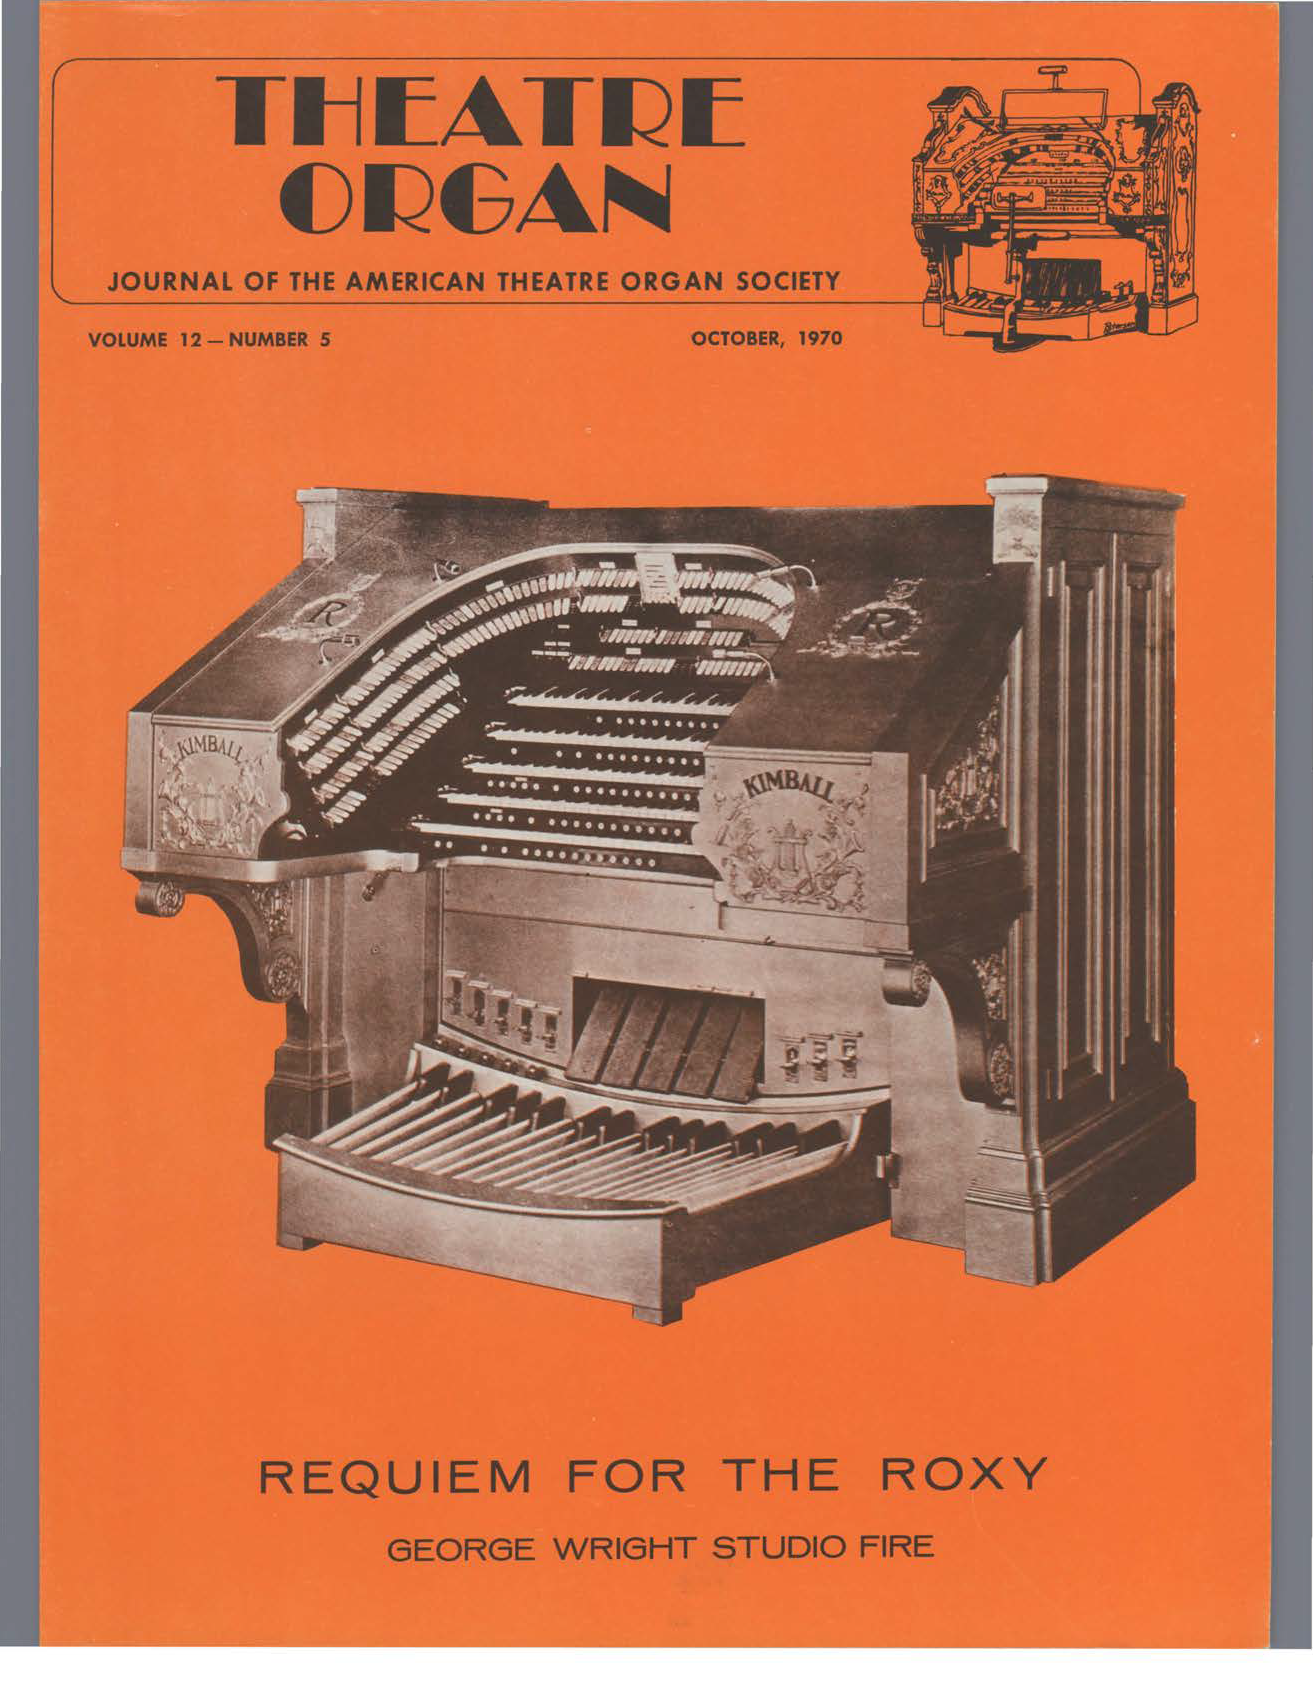 Theatre Organ, October 1970, Volume 12, Number 5